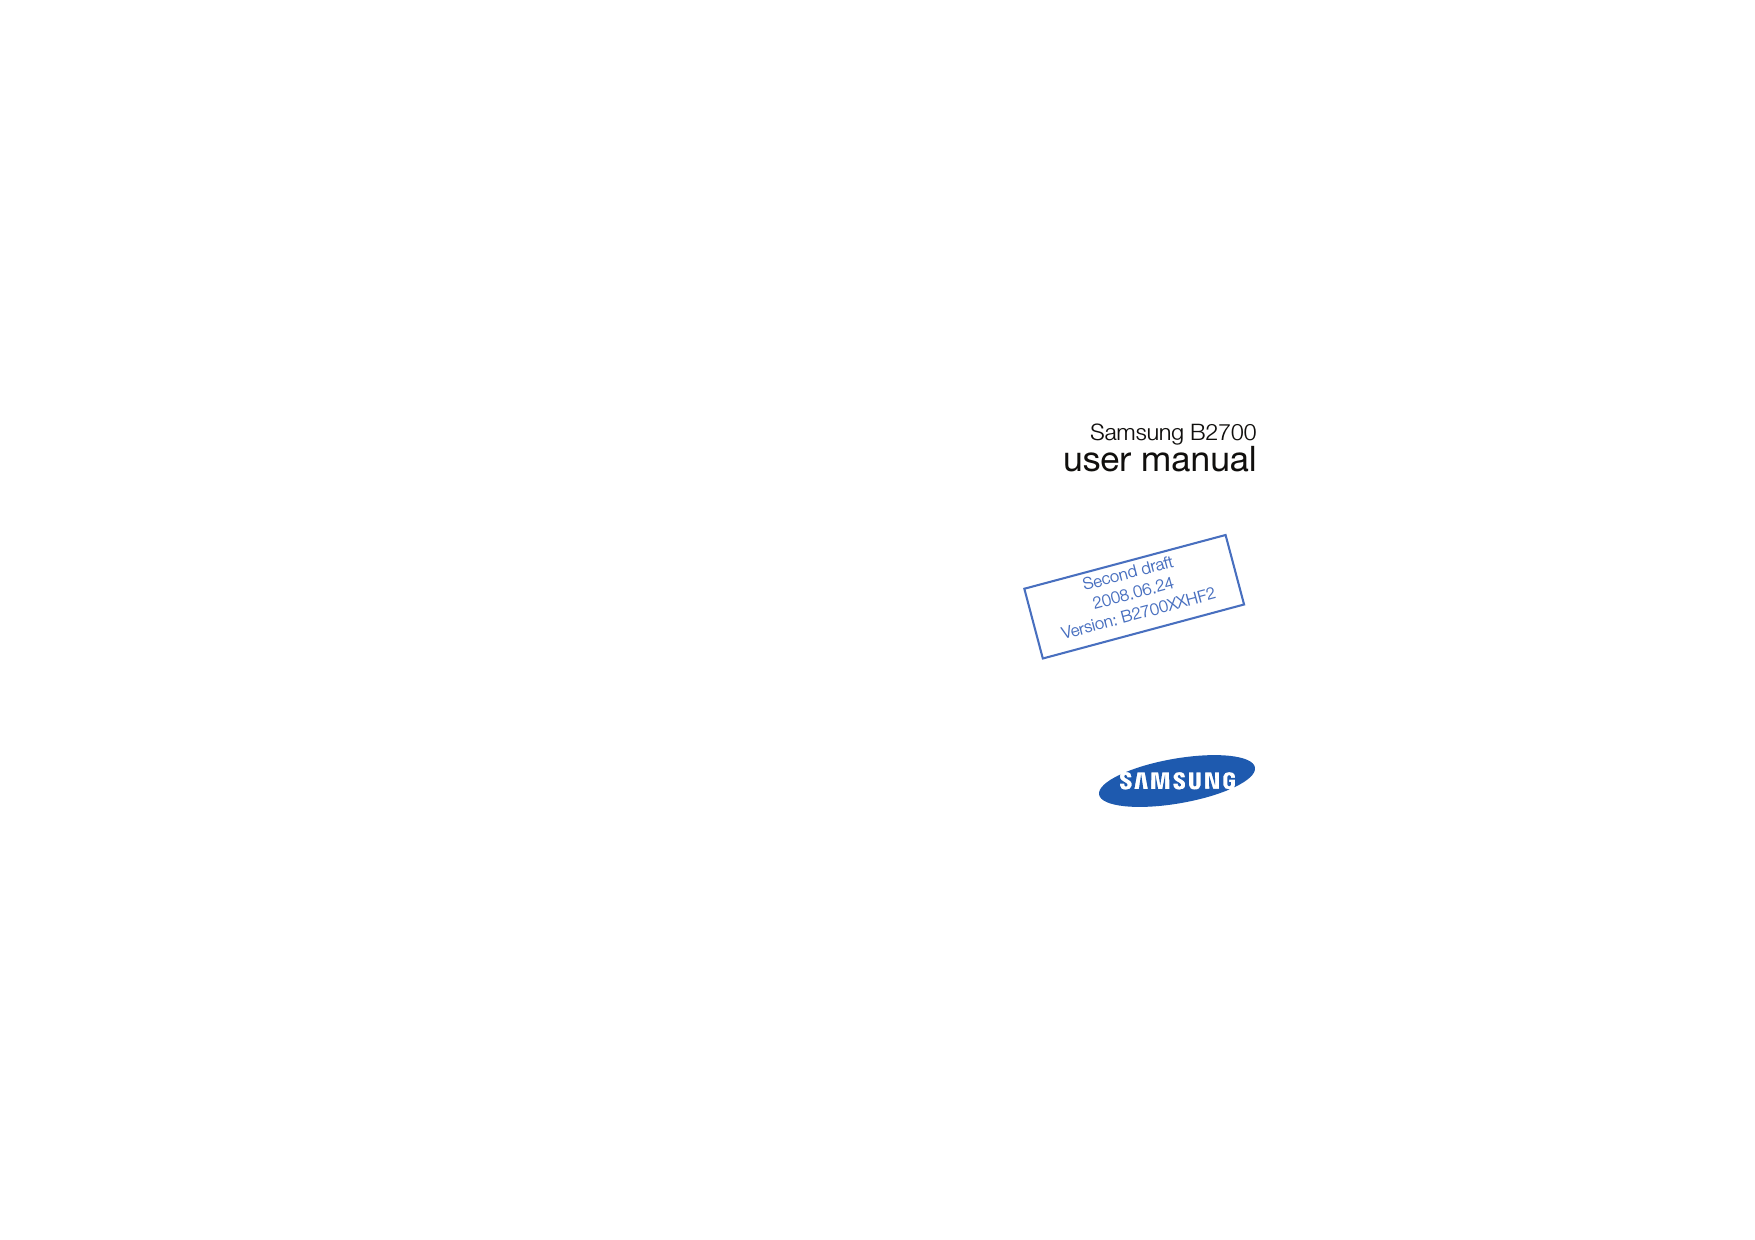 Samsung B2700user manualSecond draft2008.06.24Version: B2700XXHF2